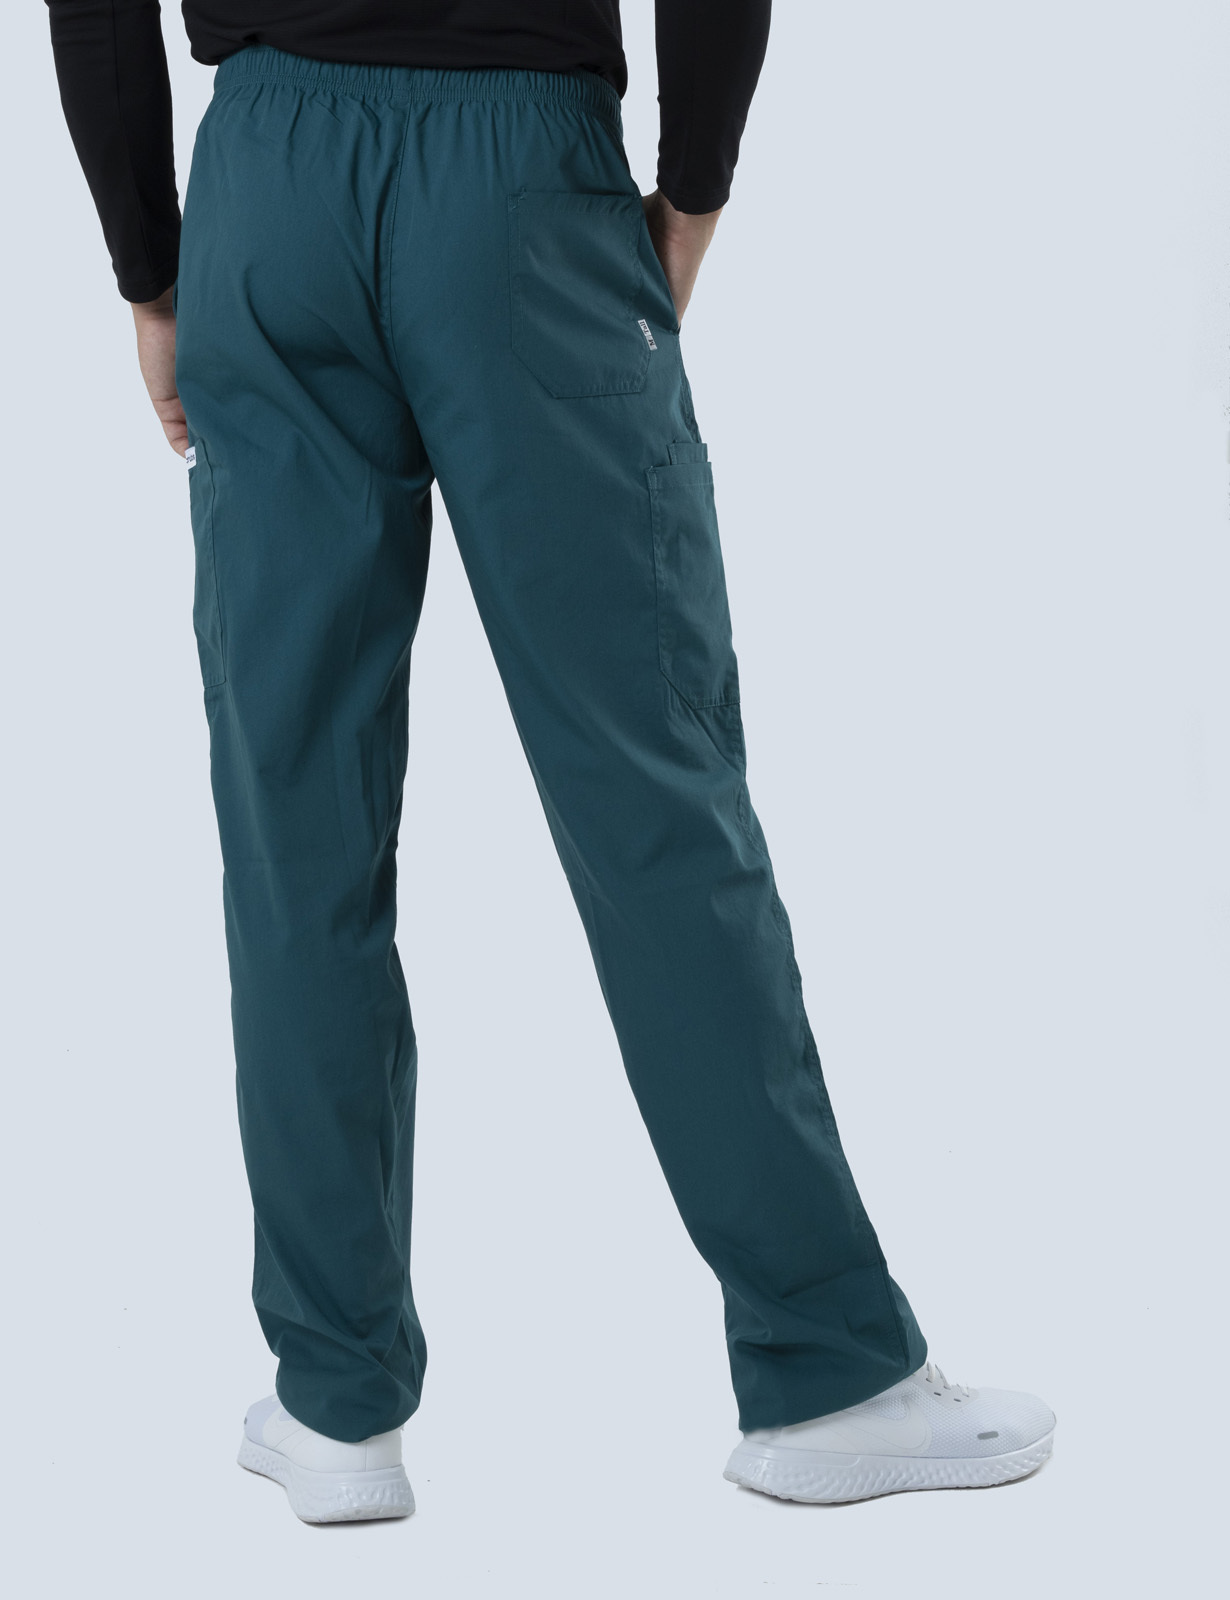 Men's Cargo Performance Pants - Caribbean - Large